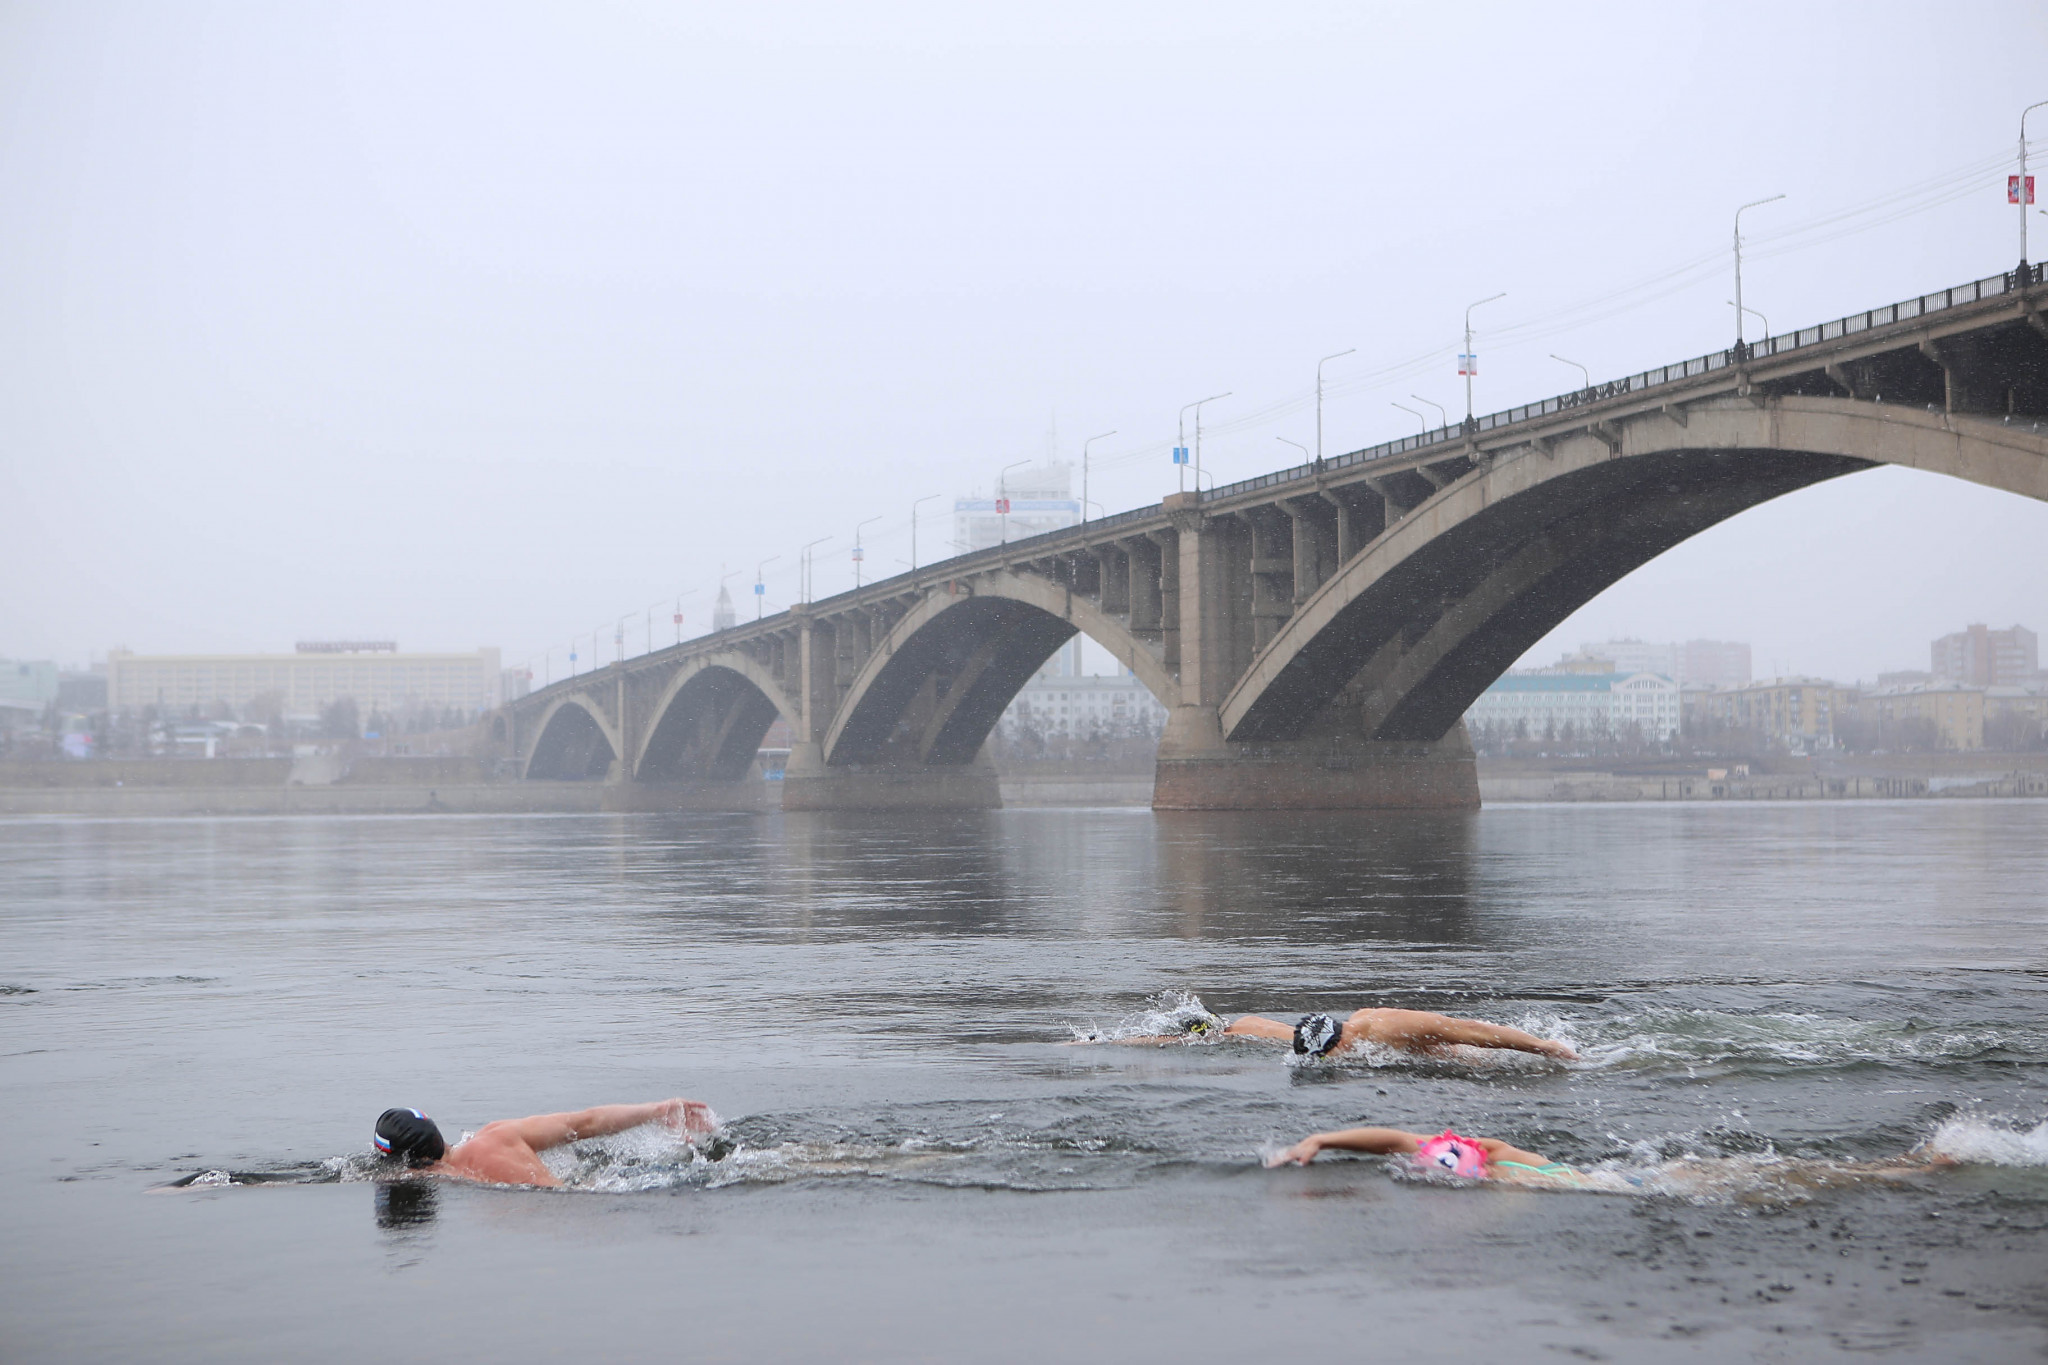 Officials, volunteers and media were invited to join the Krasnoyarsk locals for a swim in the freezing Yenisei River ©Krasnoyarsk 2019